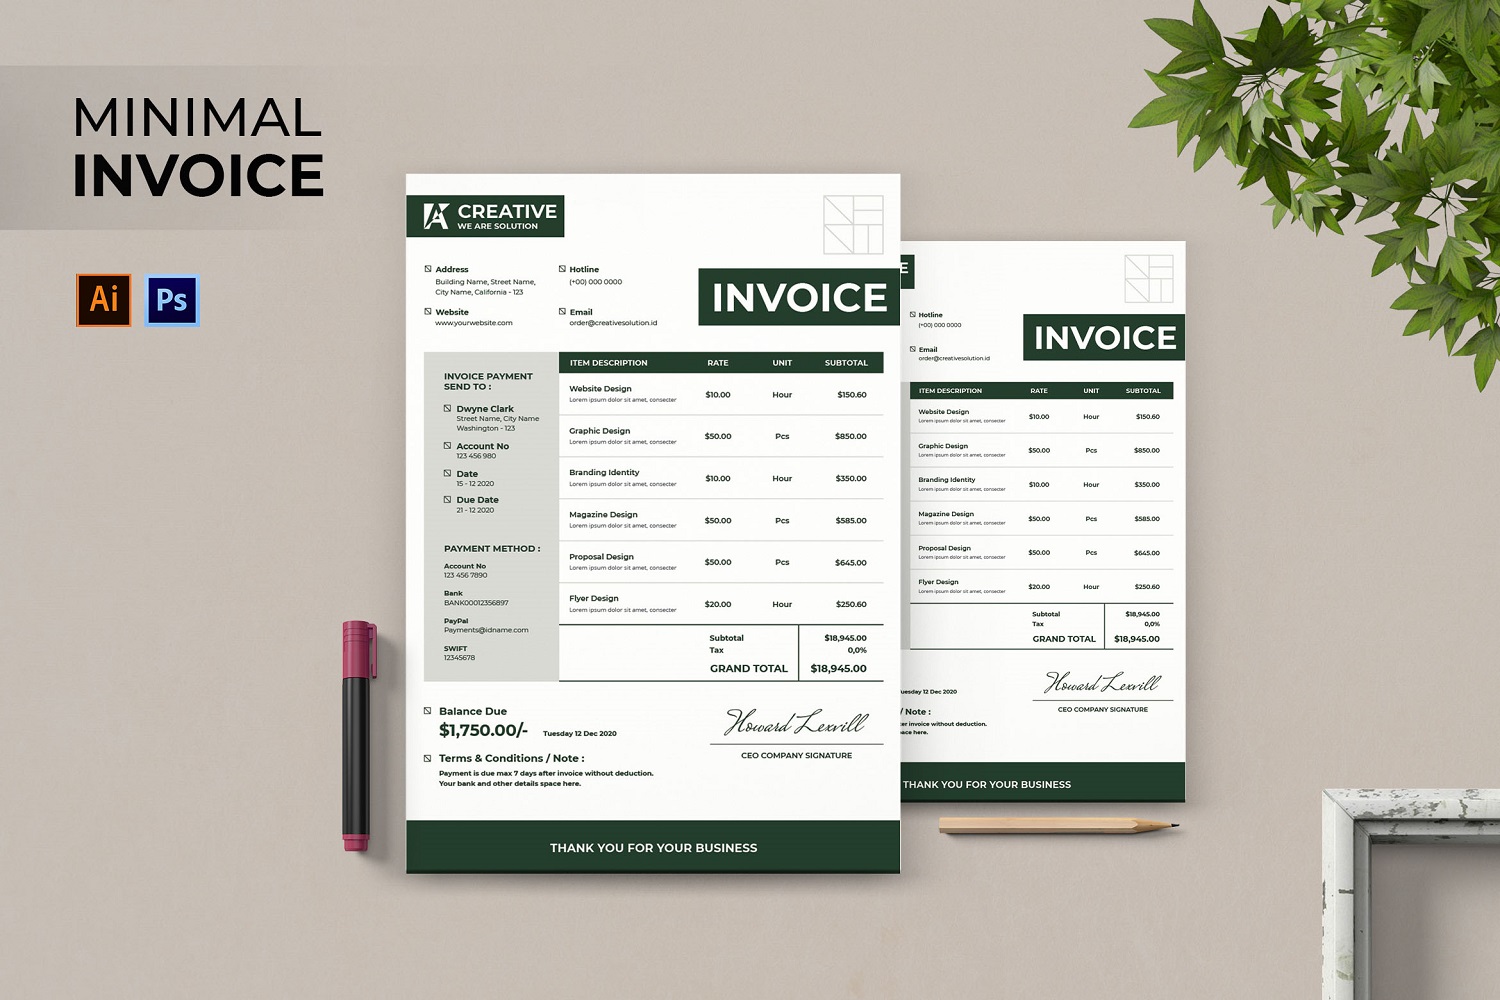 Minimal Green Invoice Corporate identity template